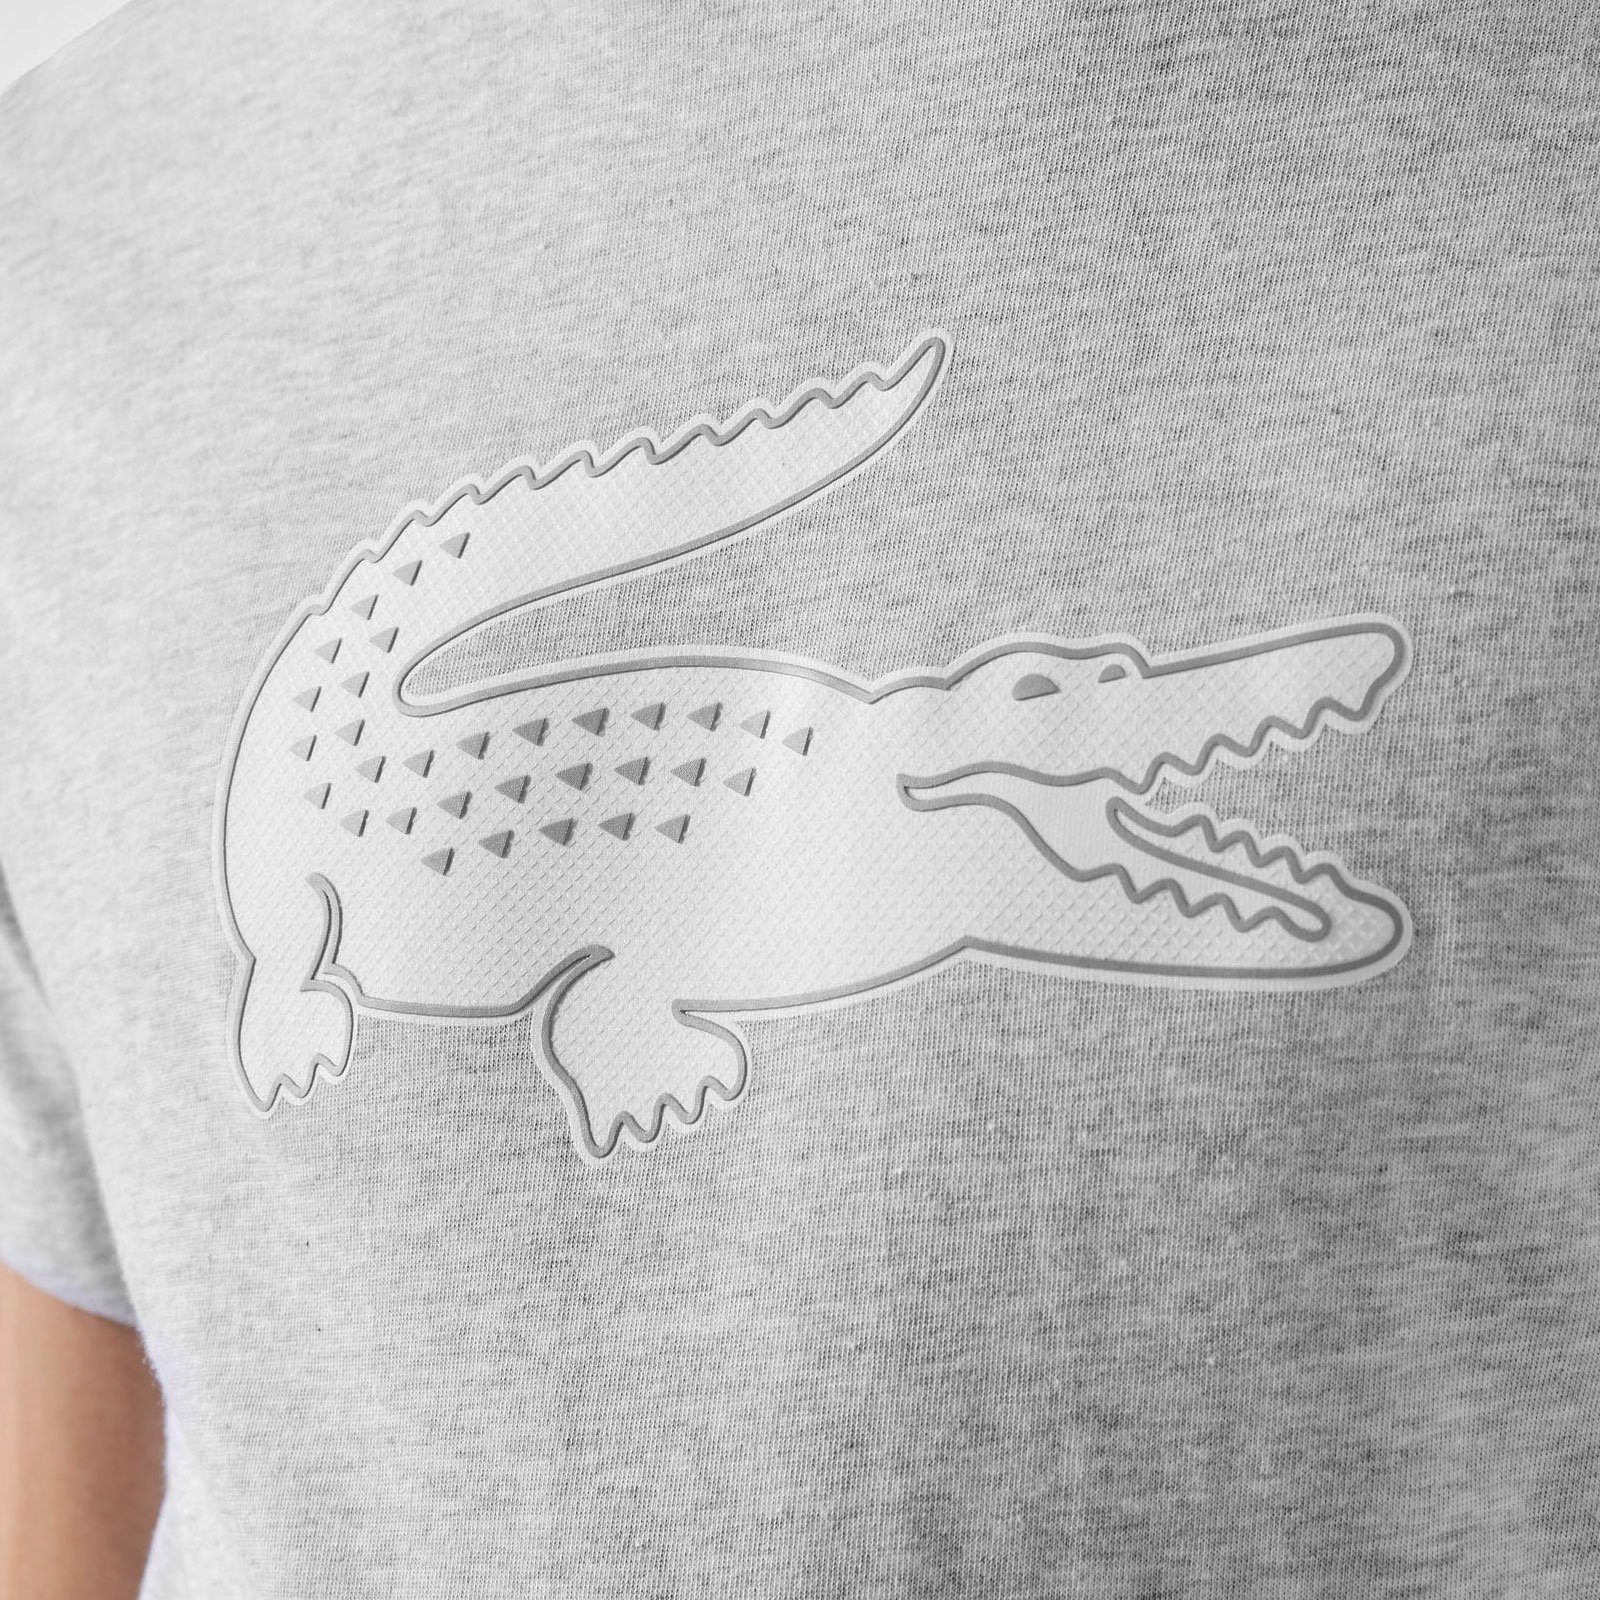 Brust chiné Kurzarmshirt mit gris blanc Lacoste / großem Krokodil-T-Shirt BG3 Krokodil auf der